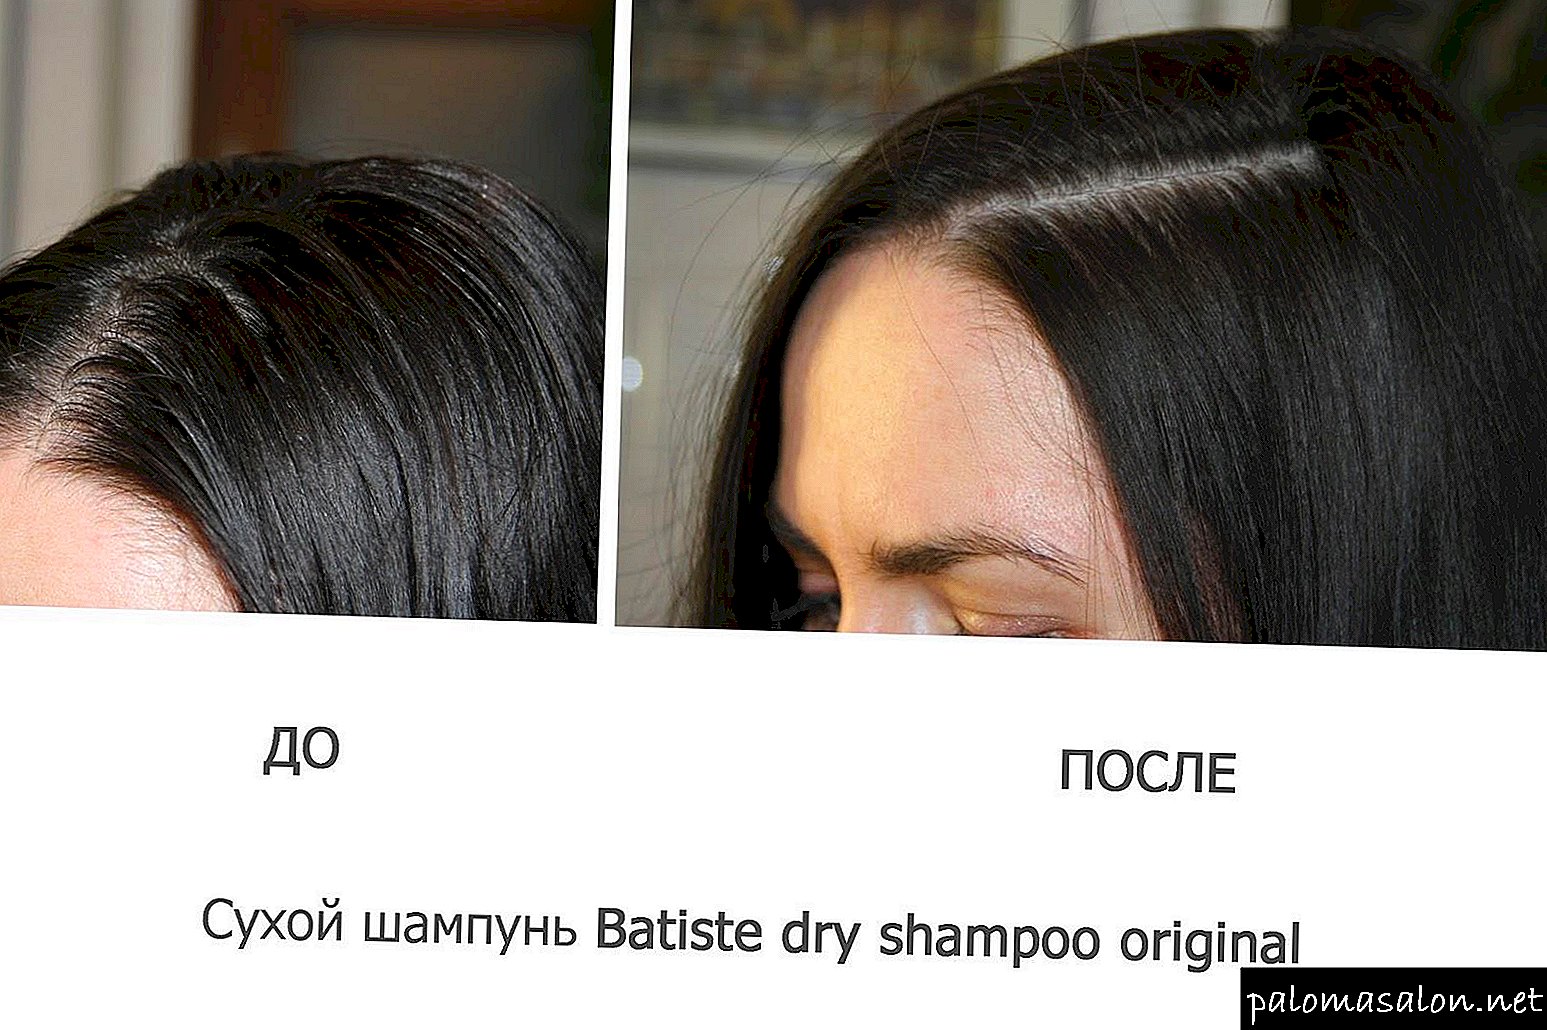 How to choose a dry hair shampoo